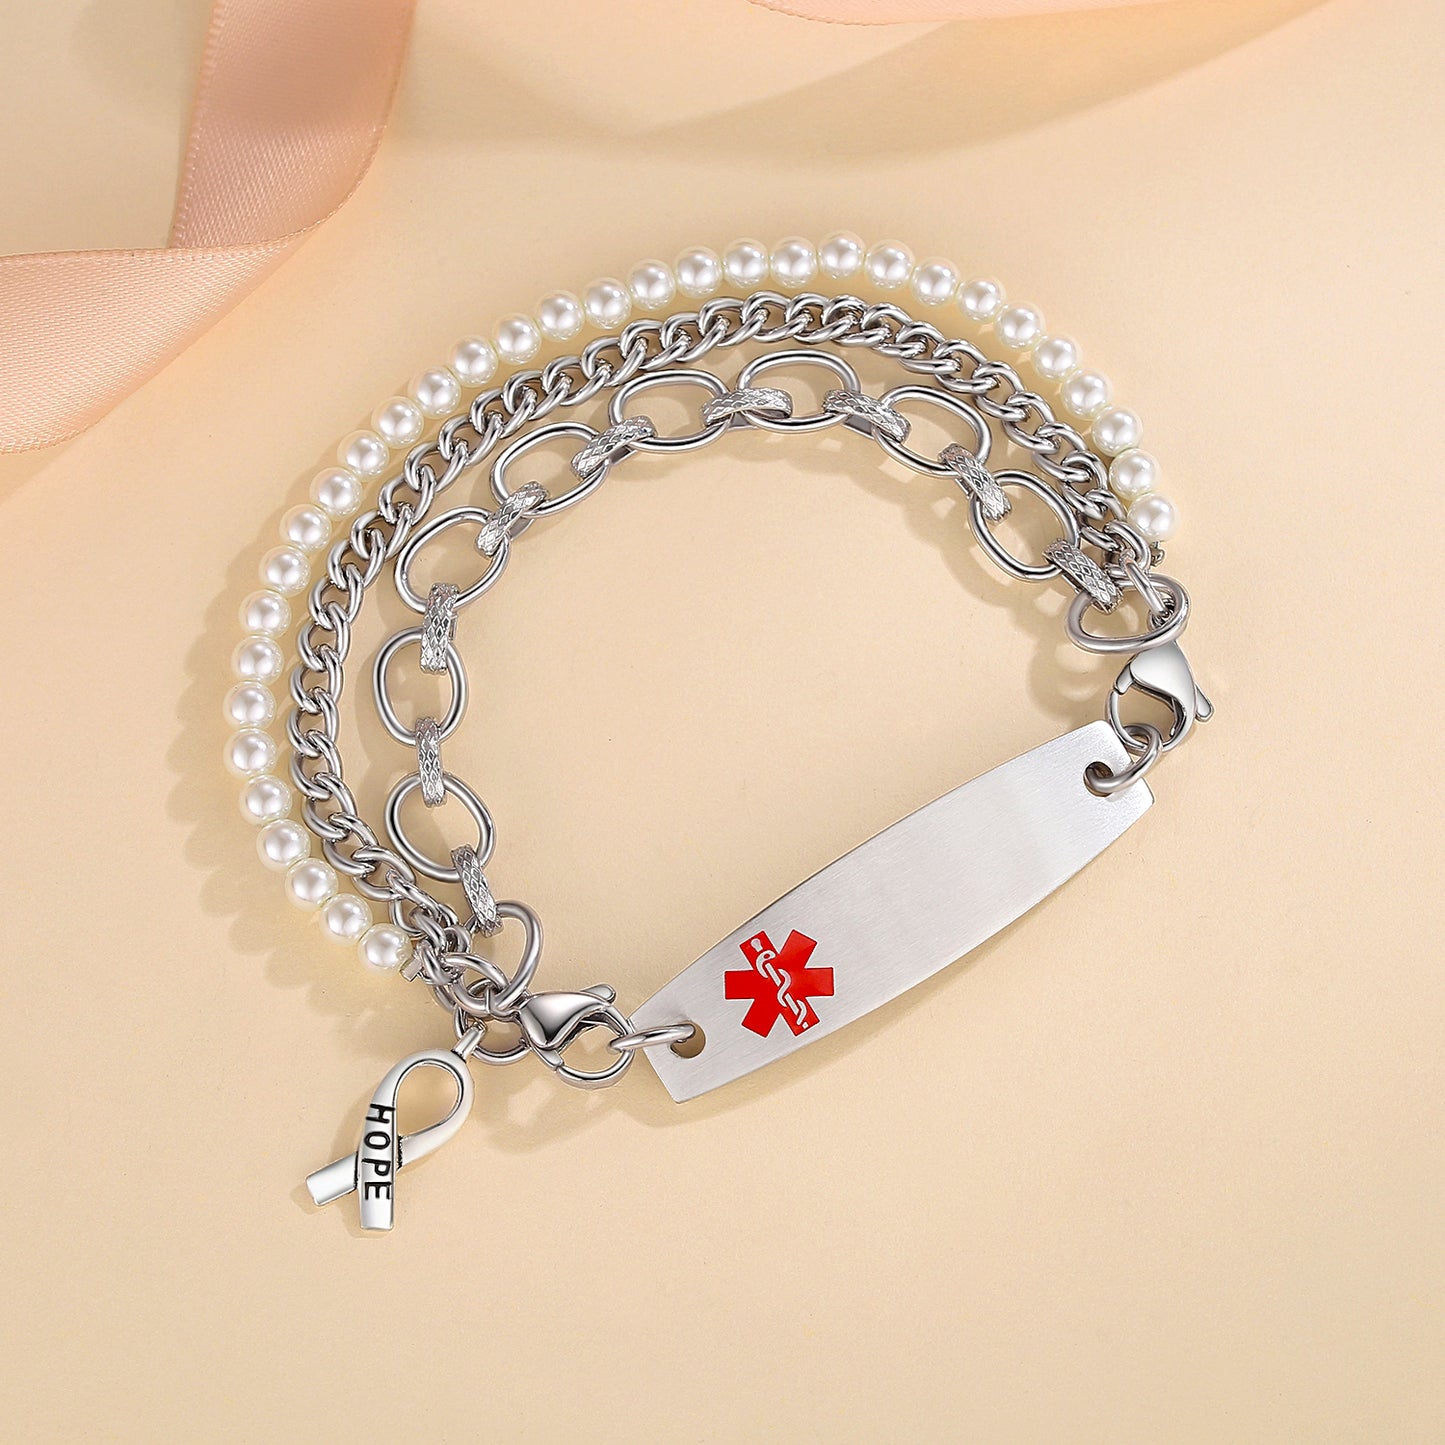 LinnaLove Interchangeable Medical Alert Bracelets for Women Stainless steel beads bracelets-customize engraving-1501